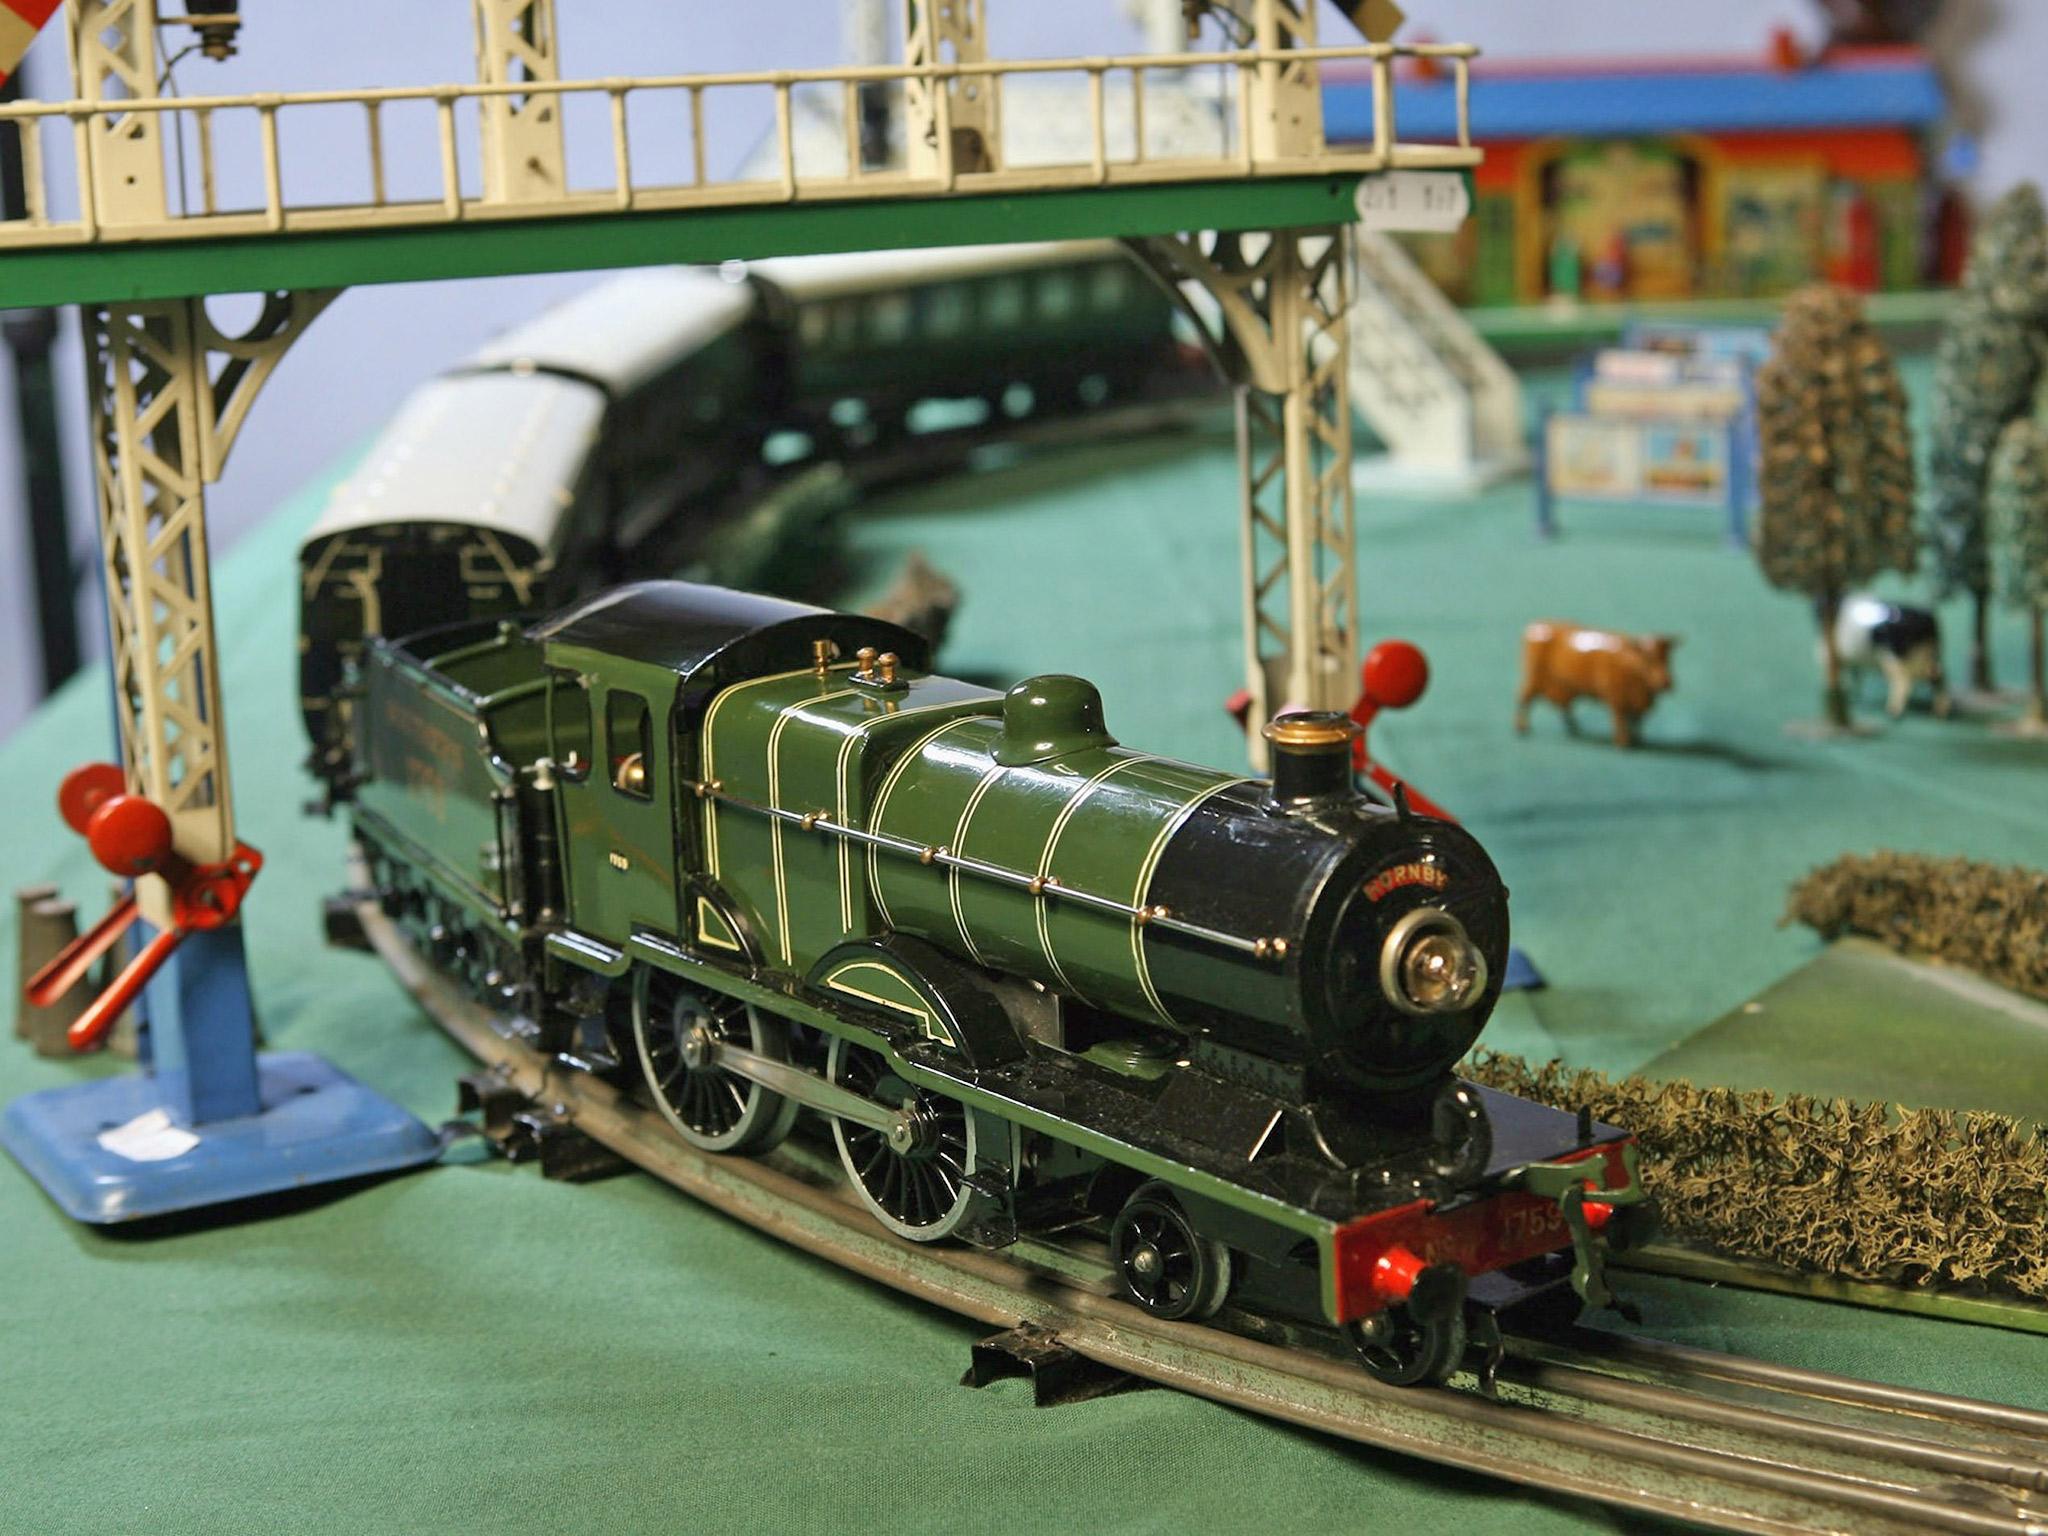 A classic Hornby train set